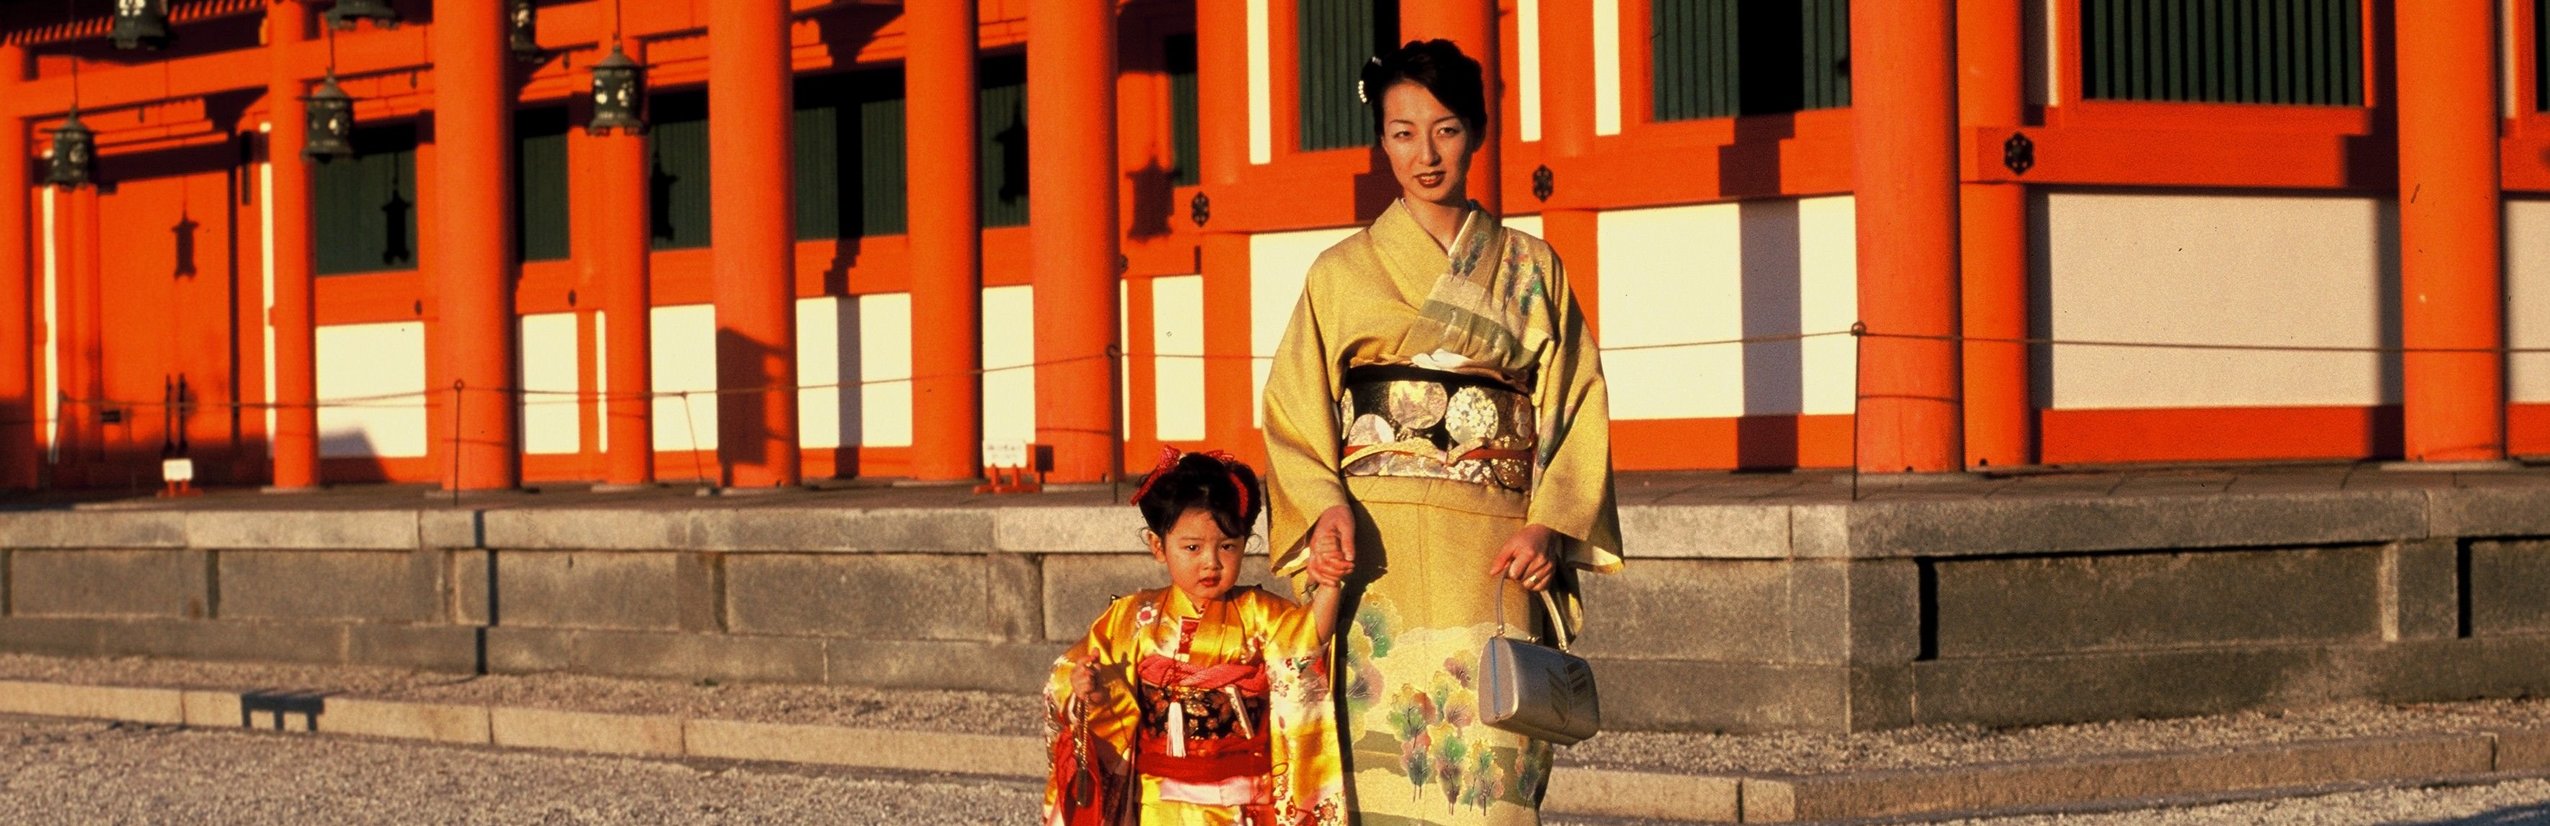 Japan mit Kindern - Japan for family - Frau mit Kind Heian Schrein